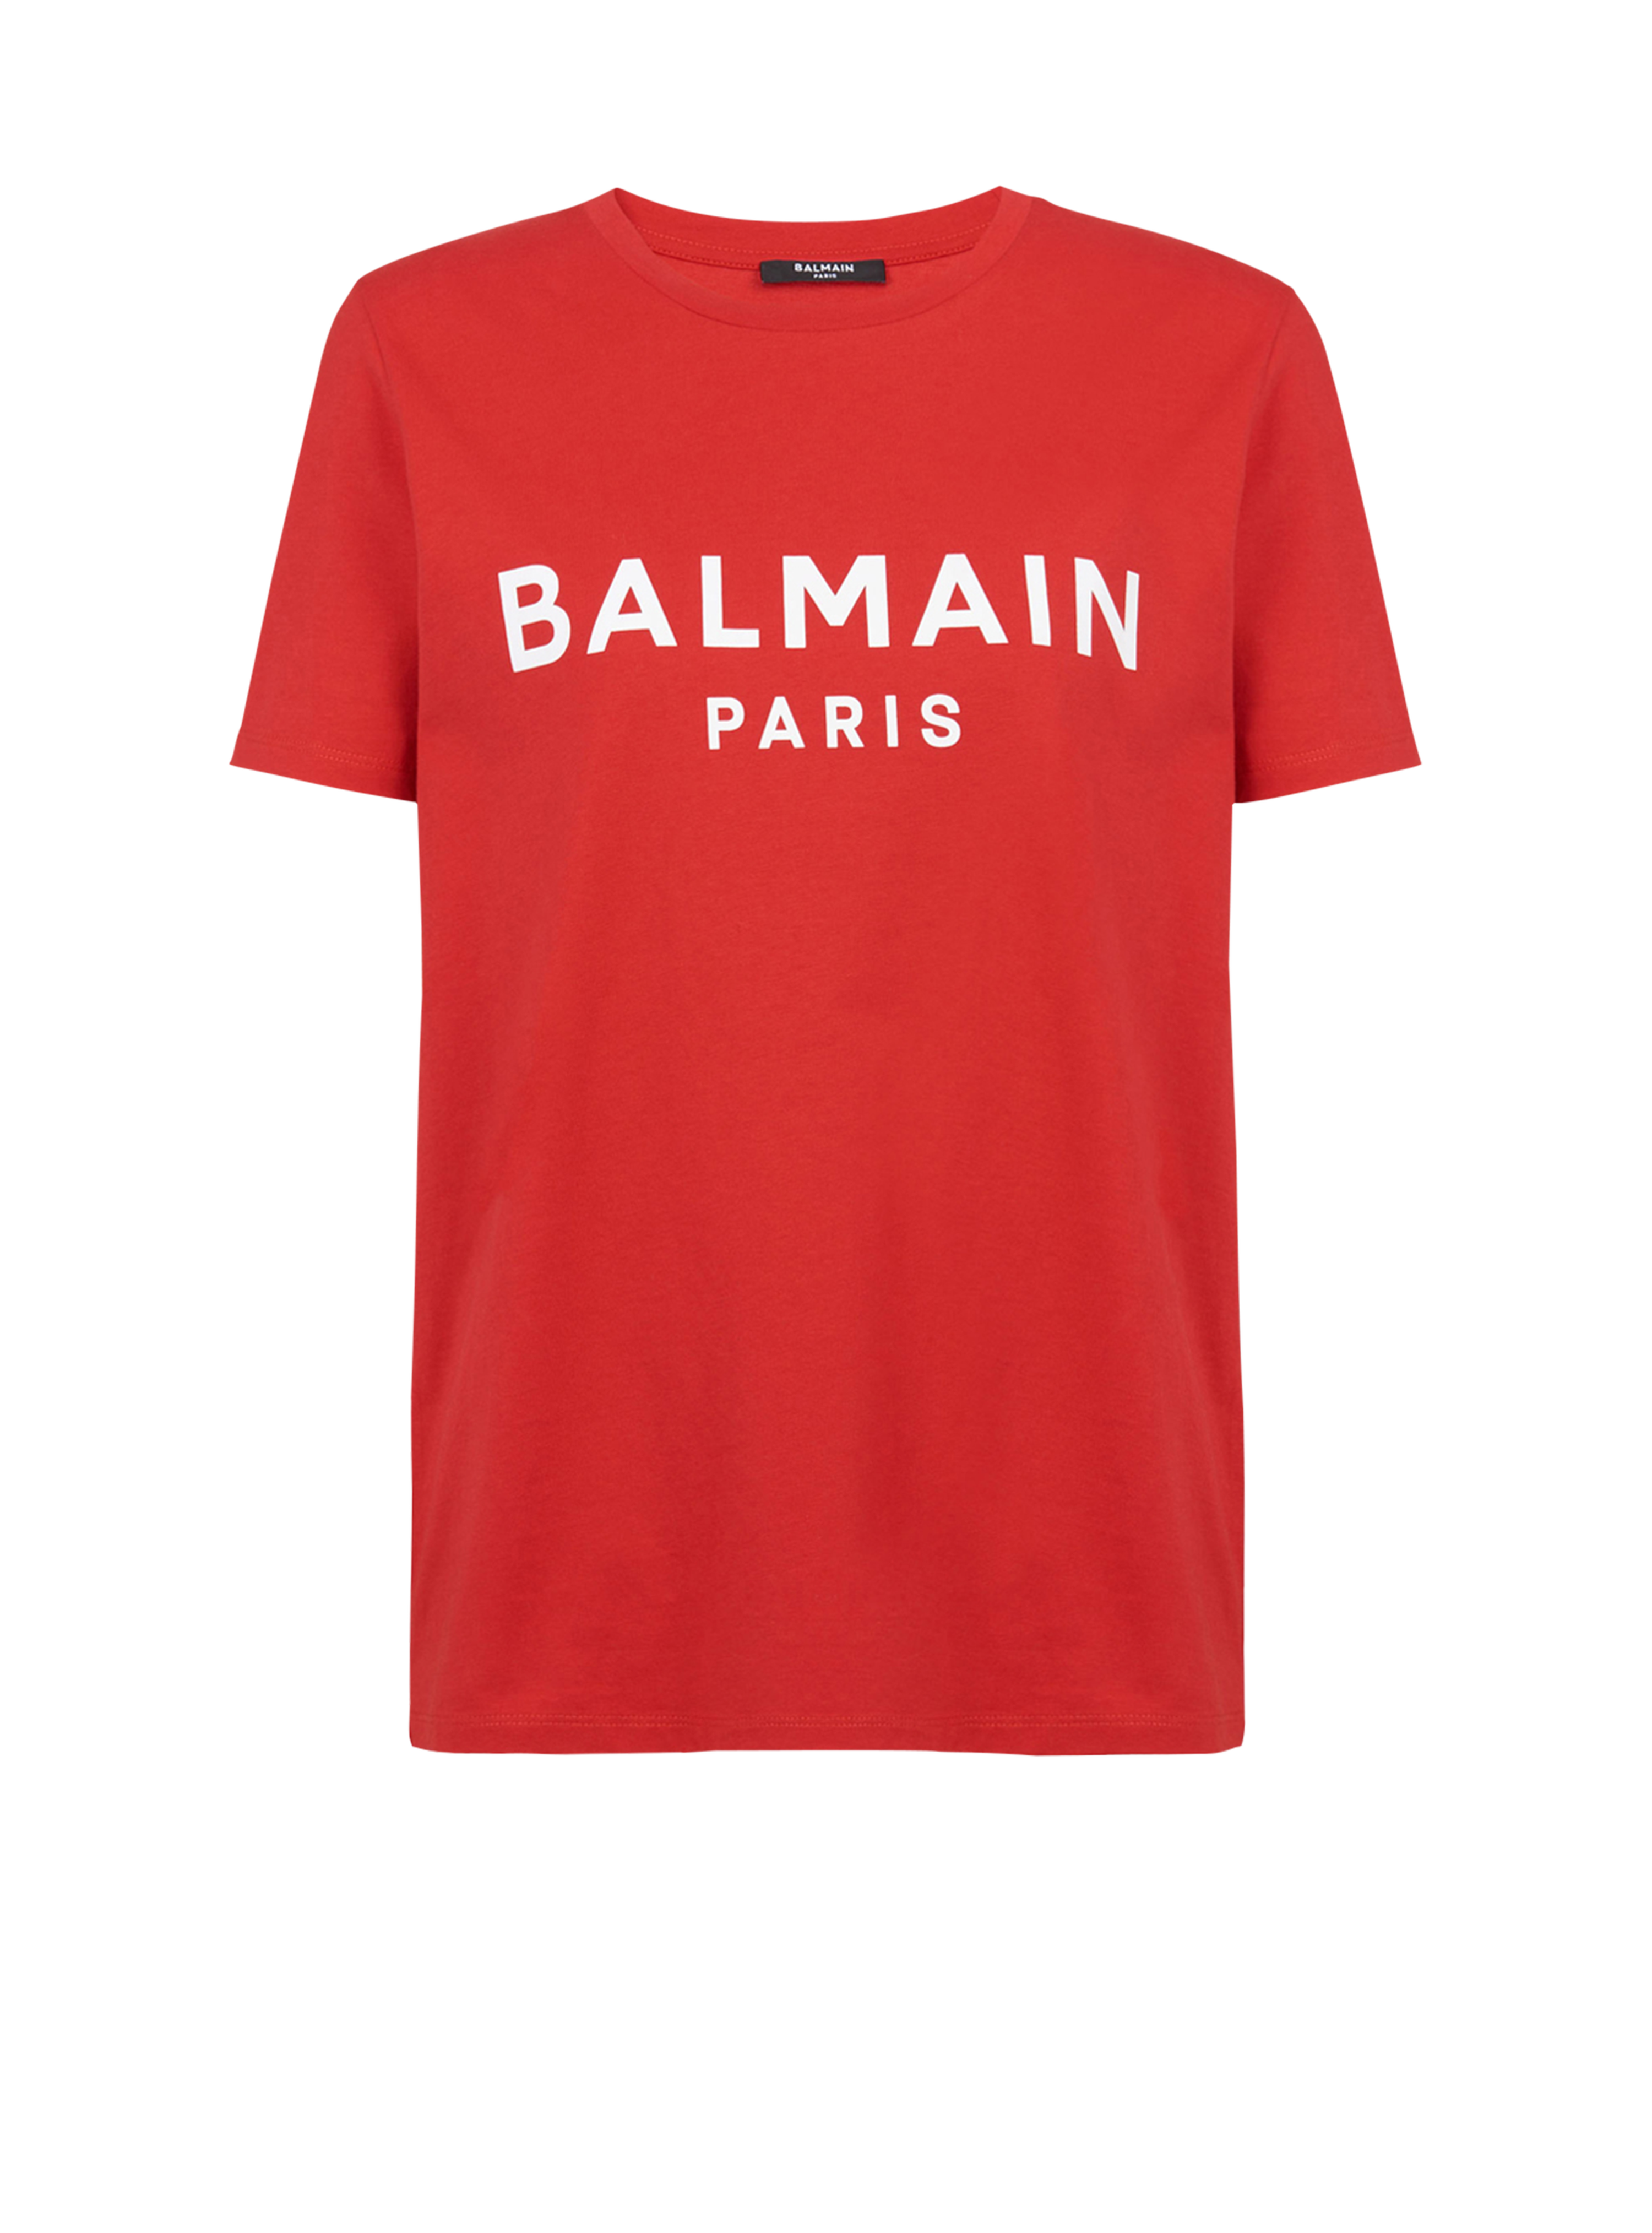 Eco-designed cotton T-shirt with Balmain logo print, red